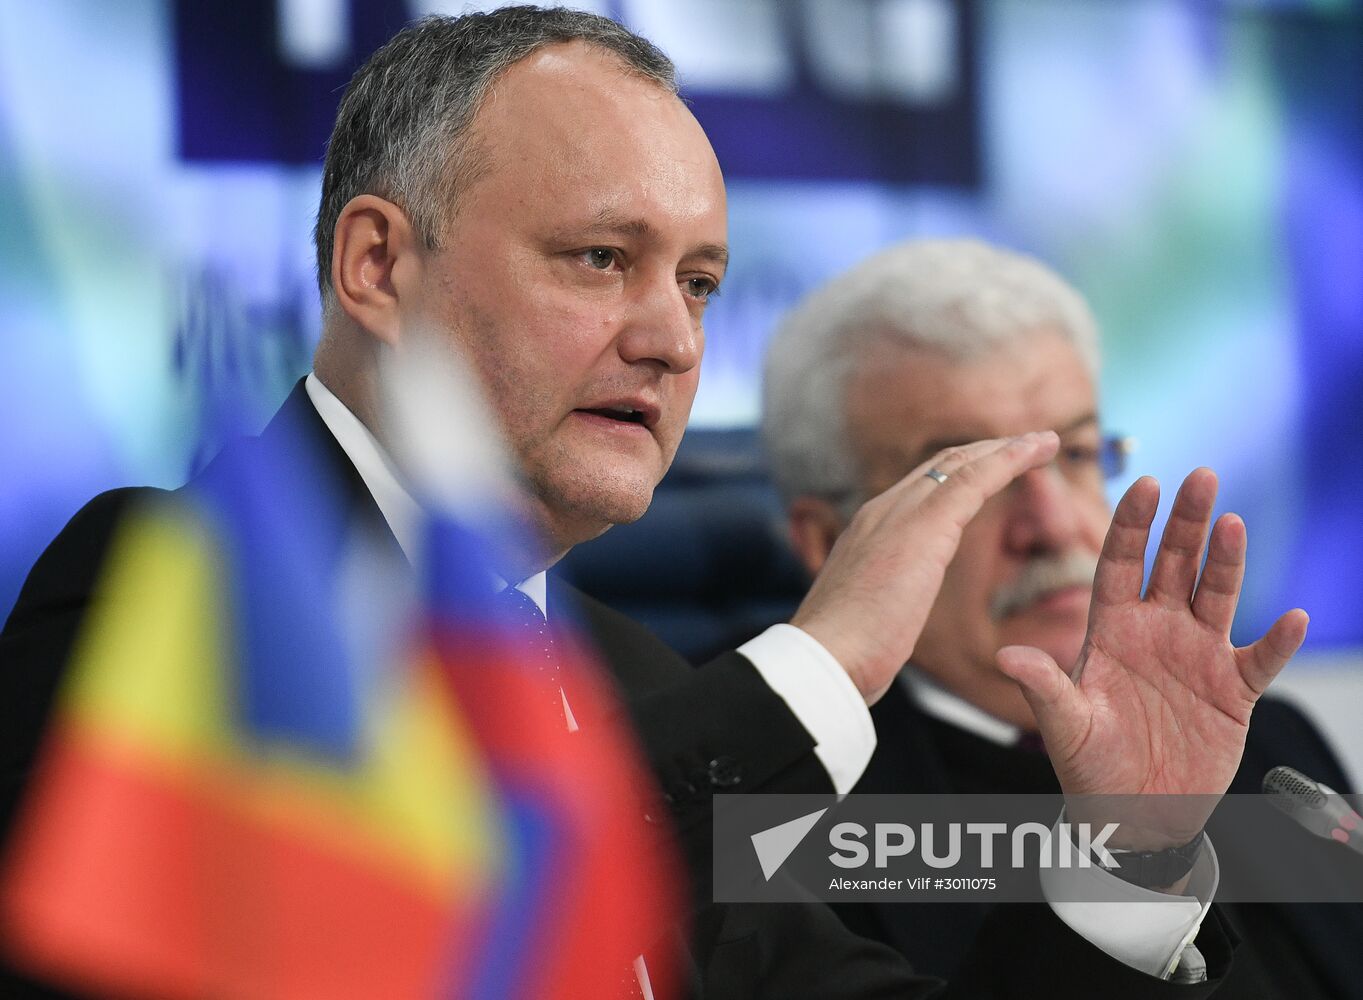 Press conference of President of Moldova Igor Dodon